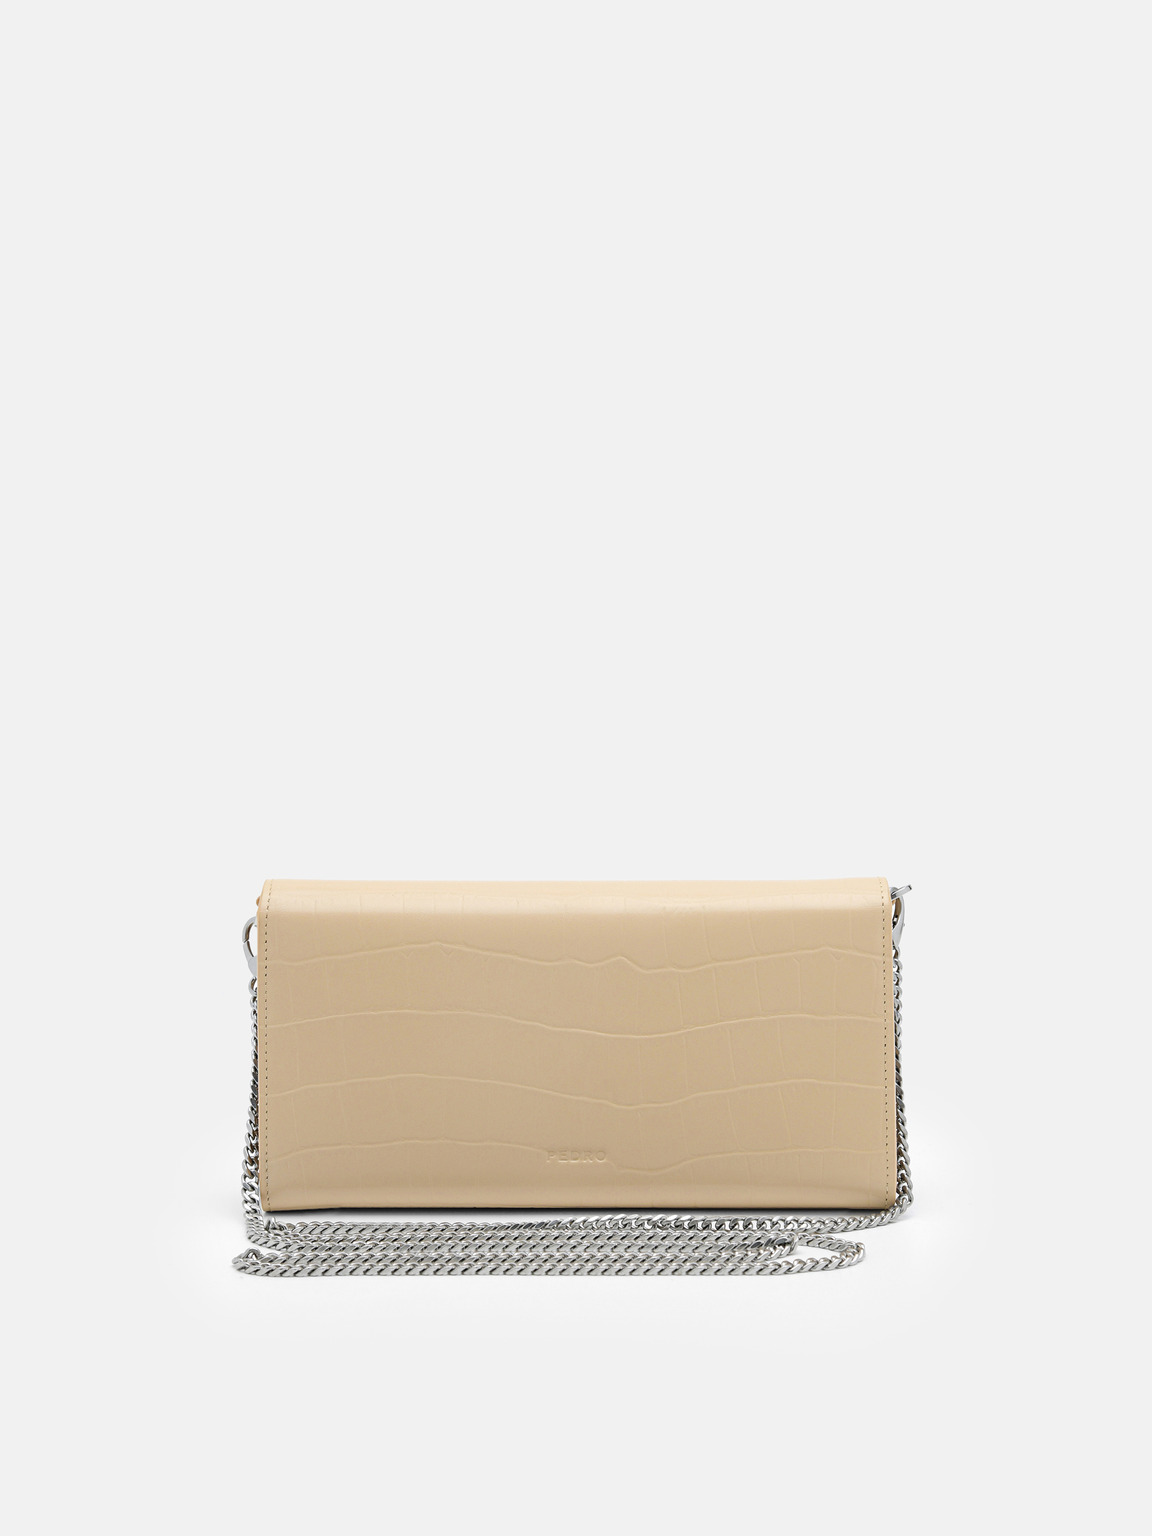 PEDRO Icon Leather Bi-Fold Long Wallet, Nude